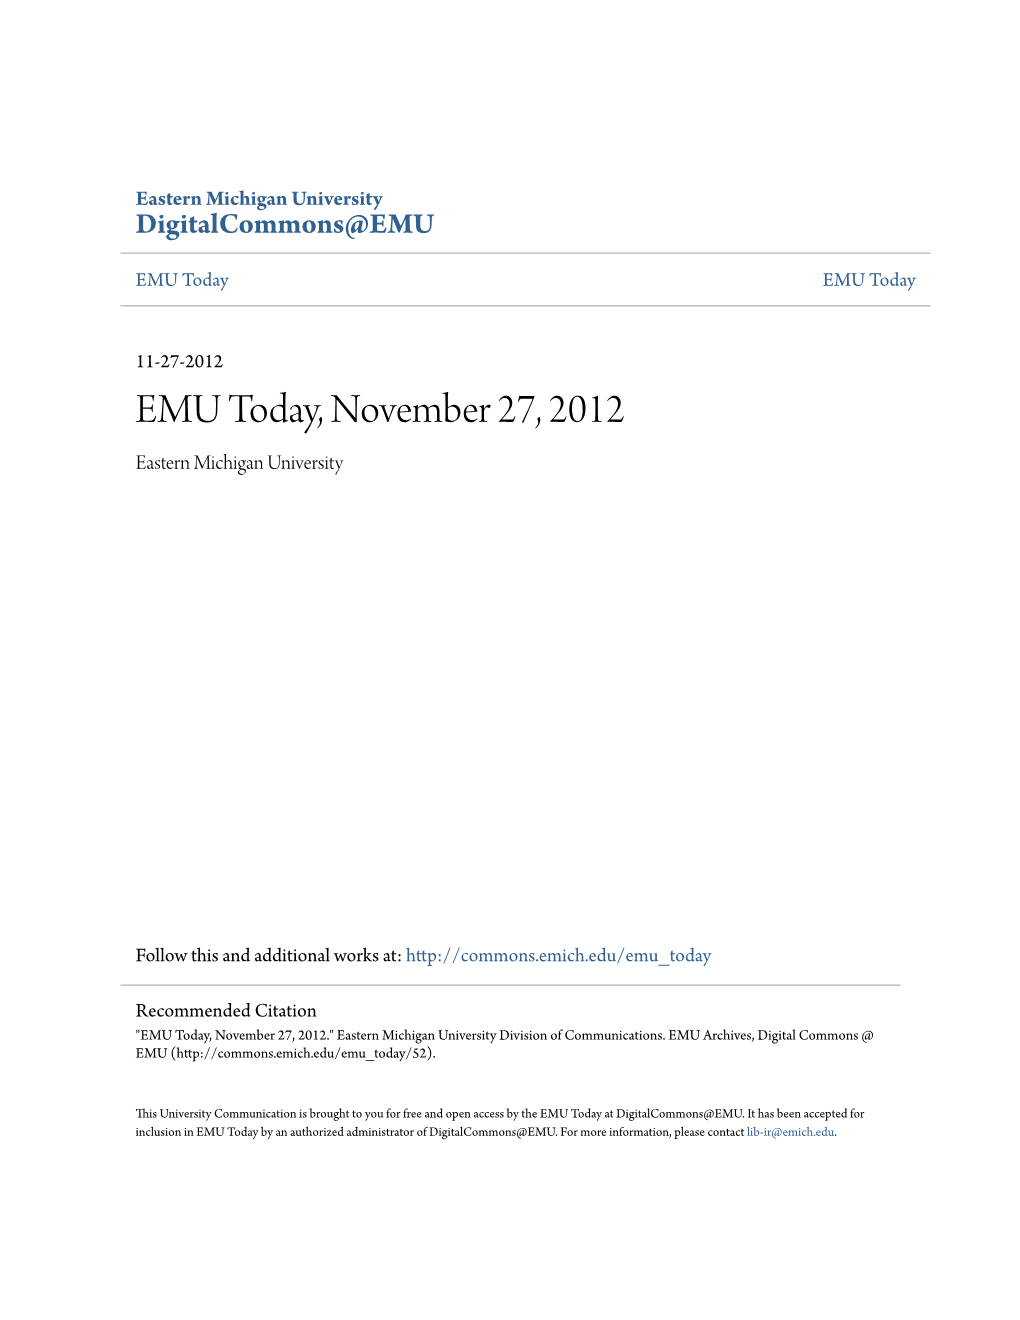 EMU Today, November 27, 2012 Eastern Michigan University